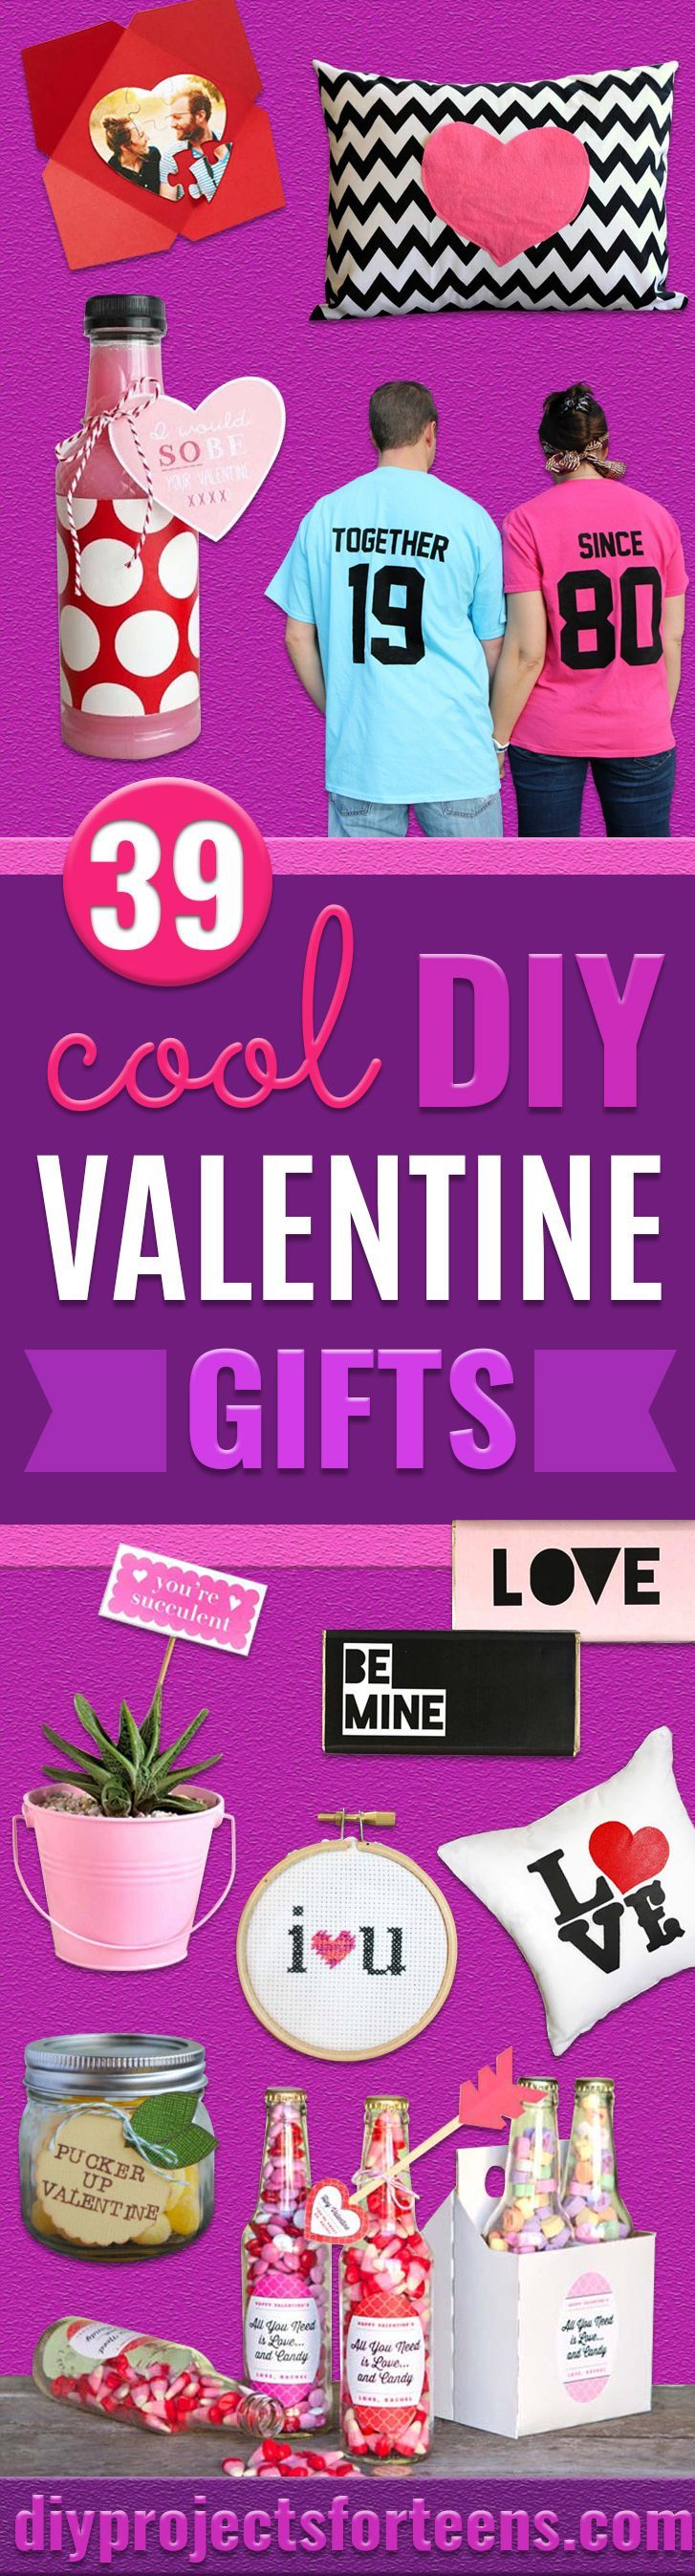 39 Cool DIY Valentine Gifts